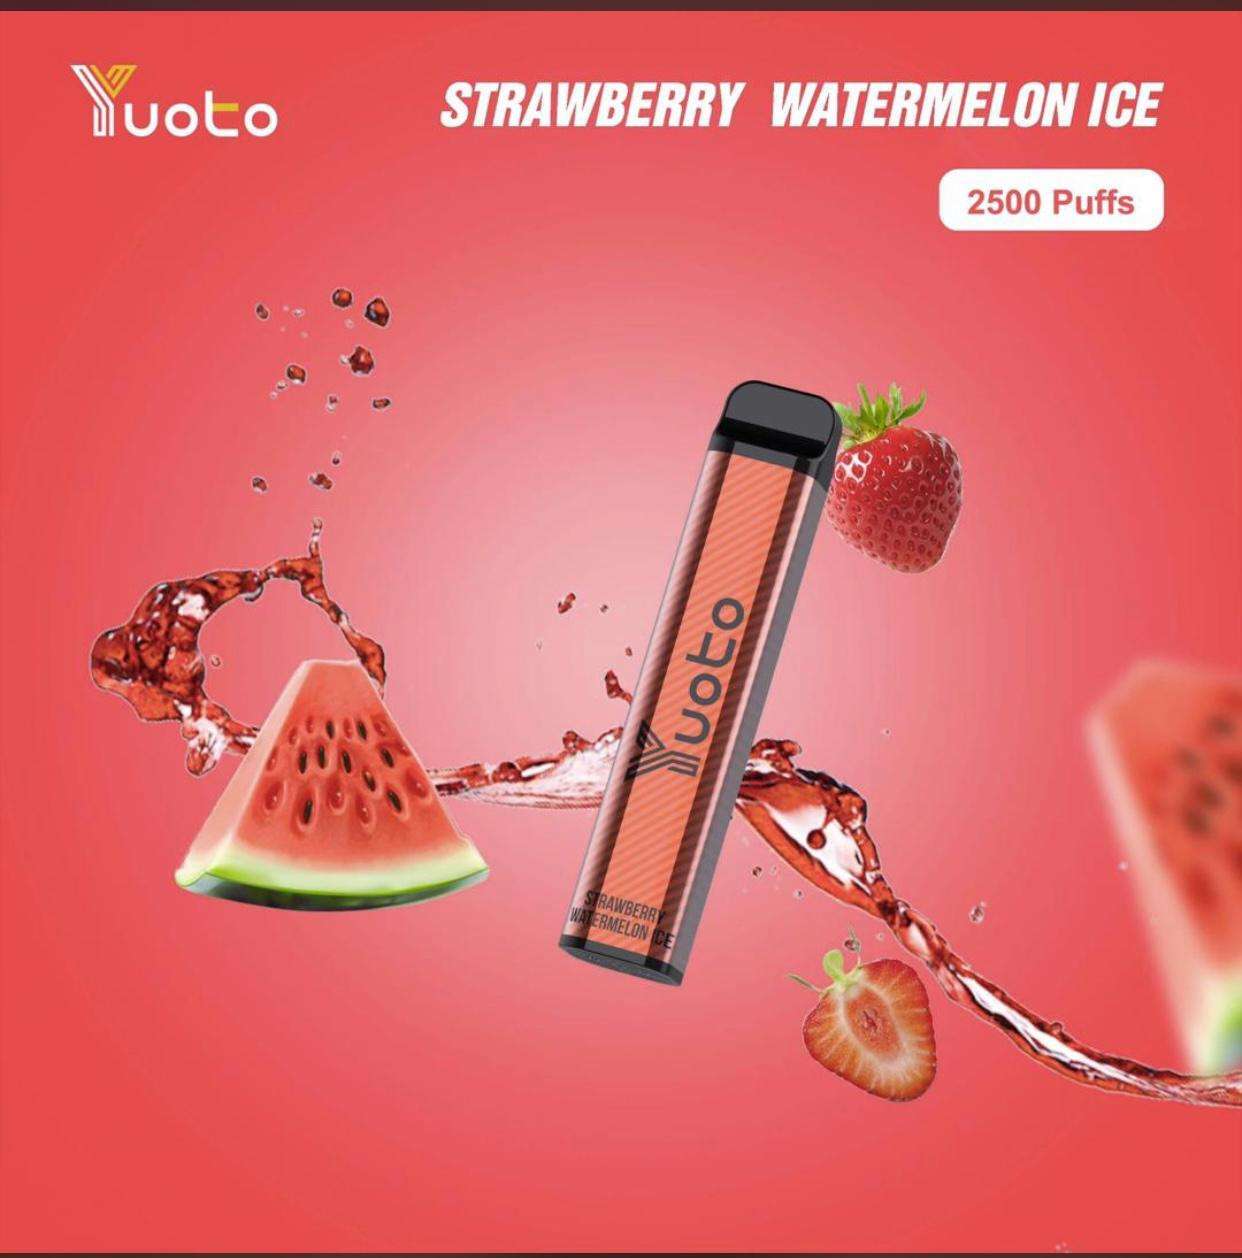 Yuoto xxl disposable strawberry watermelon ice 2500 puffs